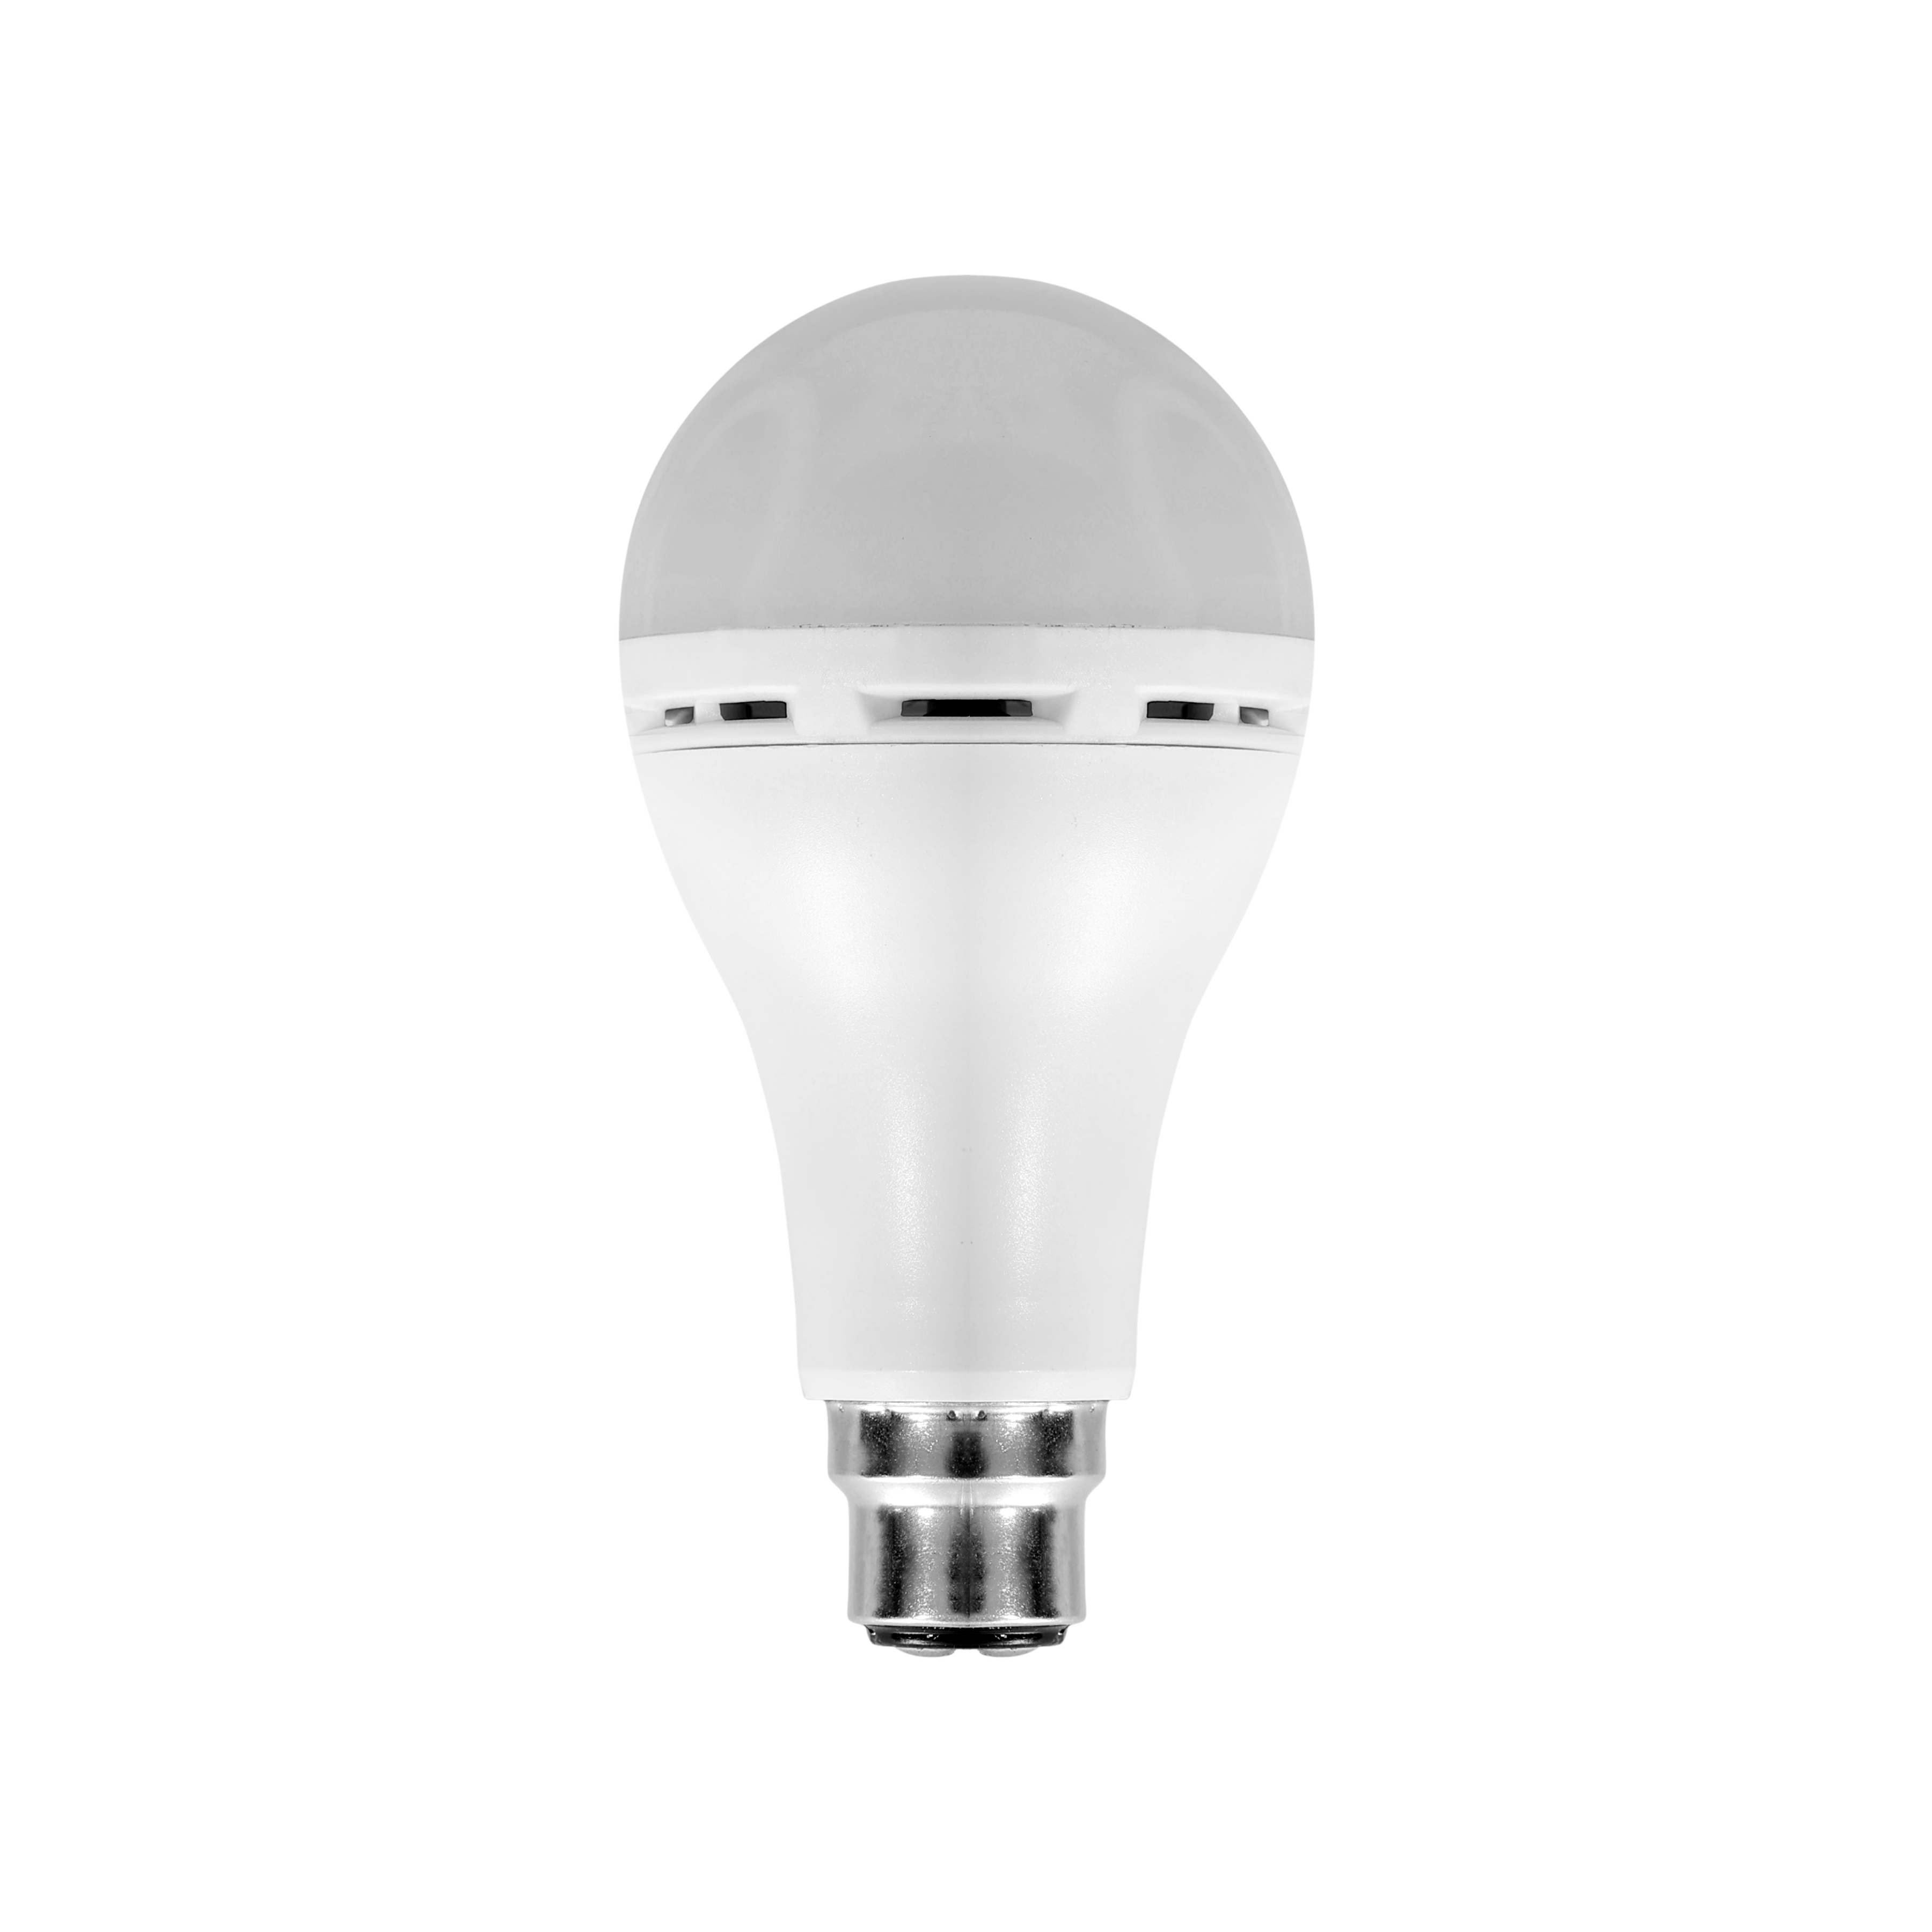 Helfinch Basic Inverter Emergency Bulb